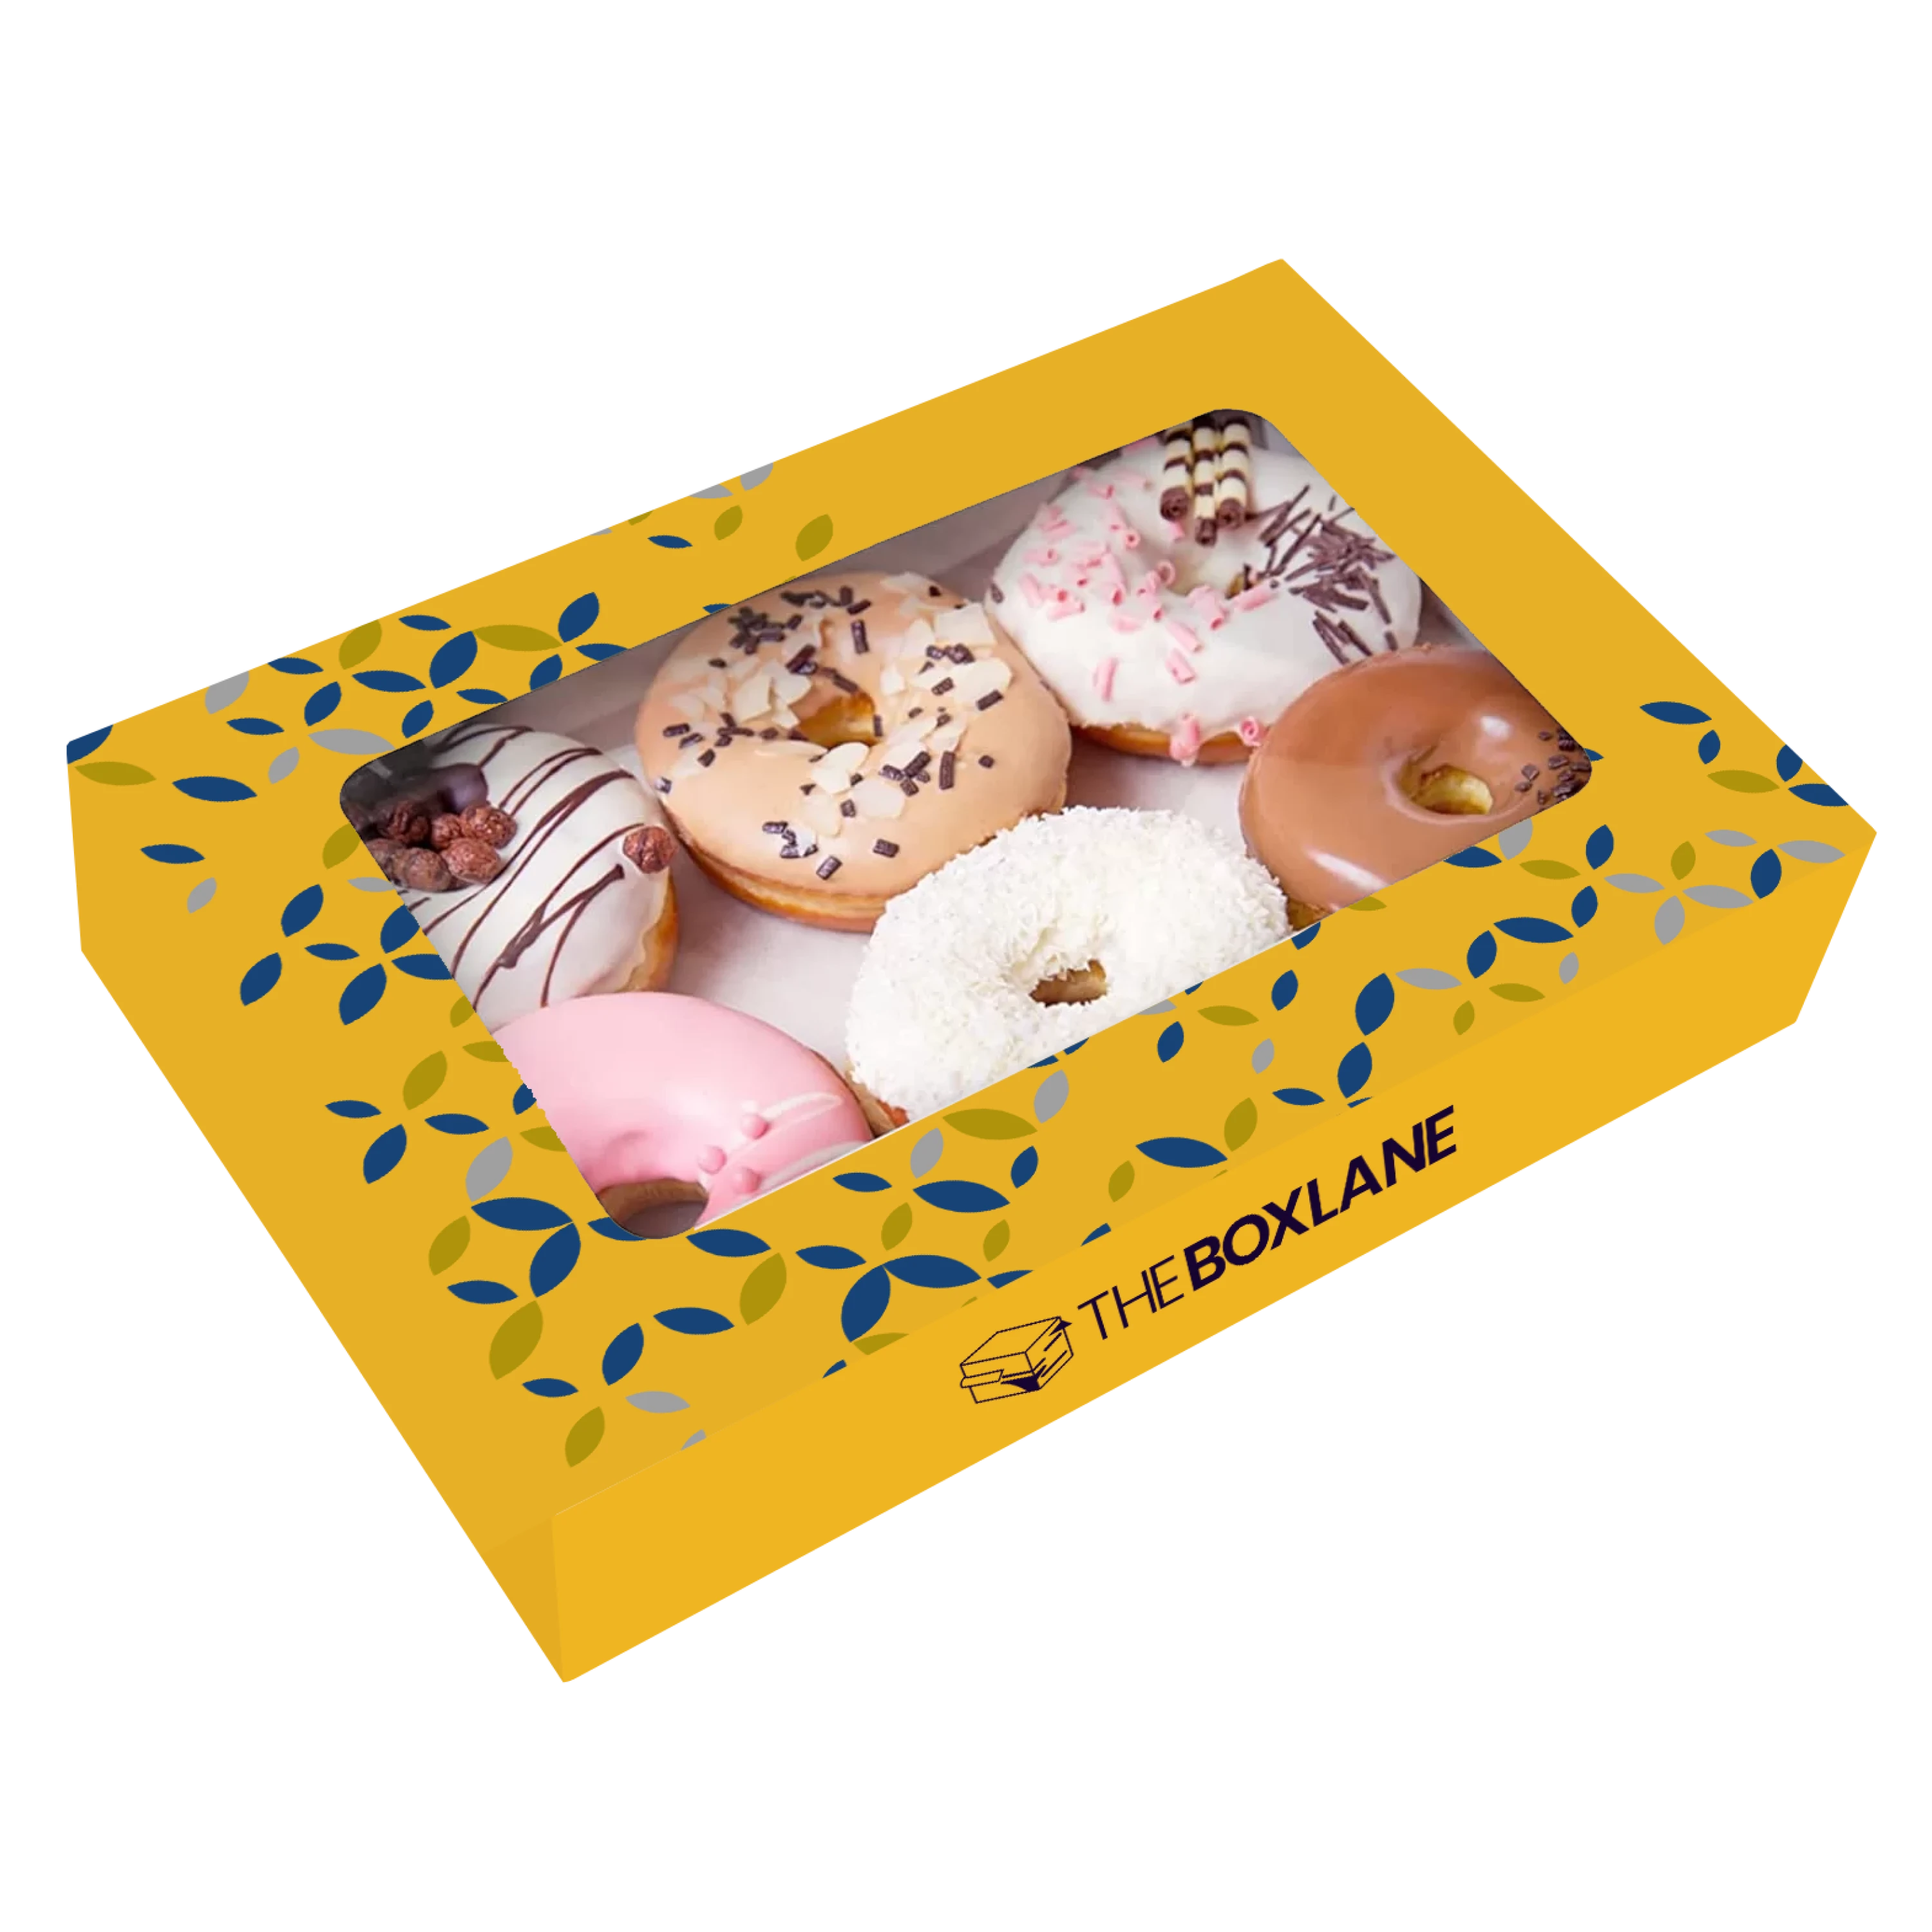 Carousel Custom Donut Boxes packaging image 2 | The Box Lane